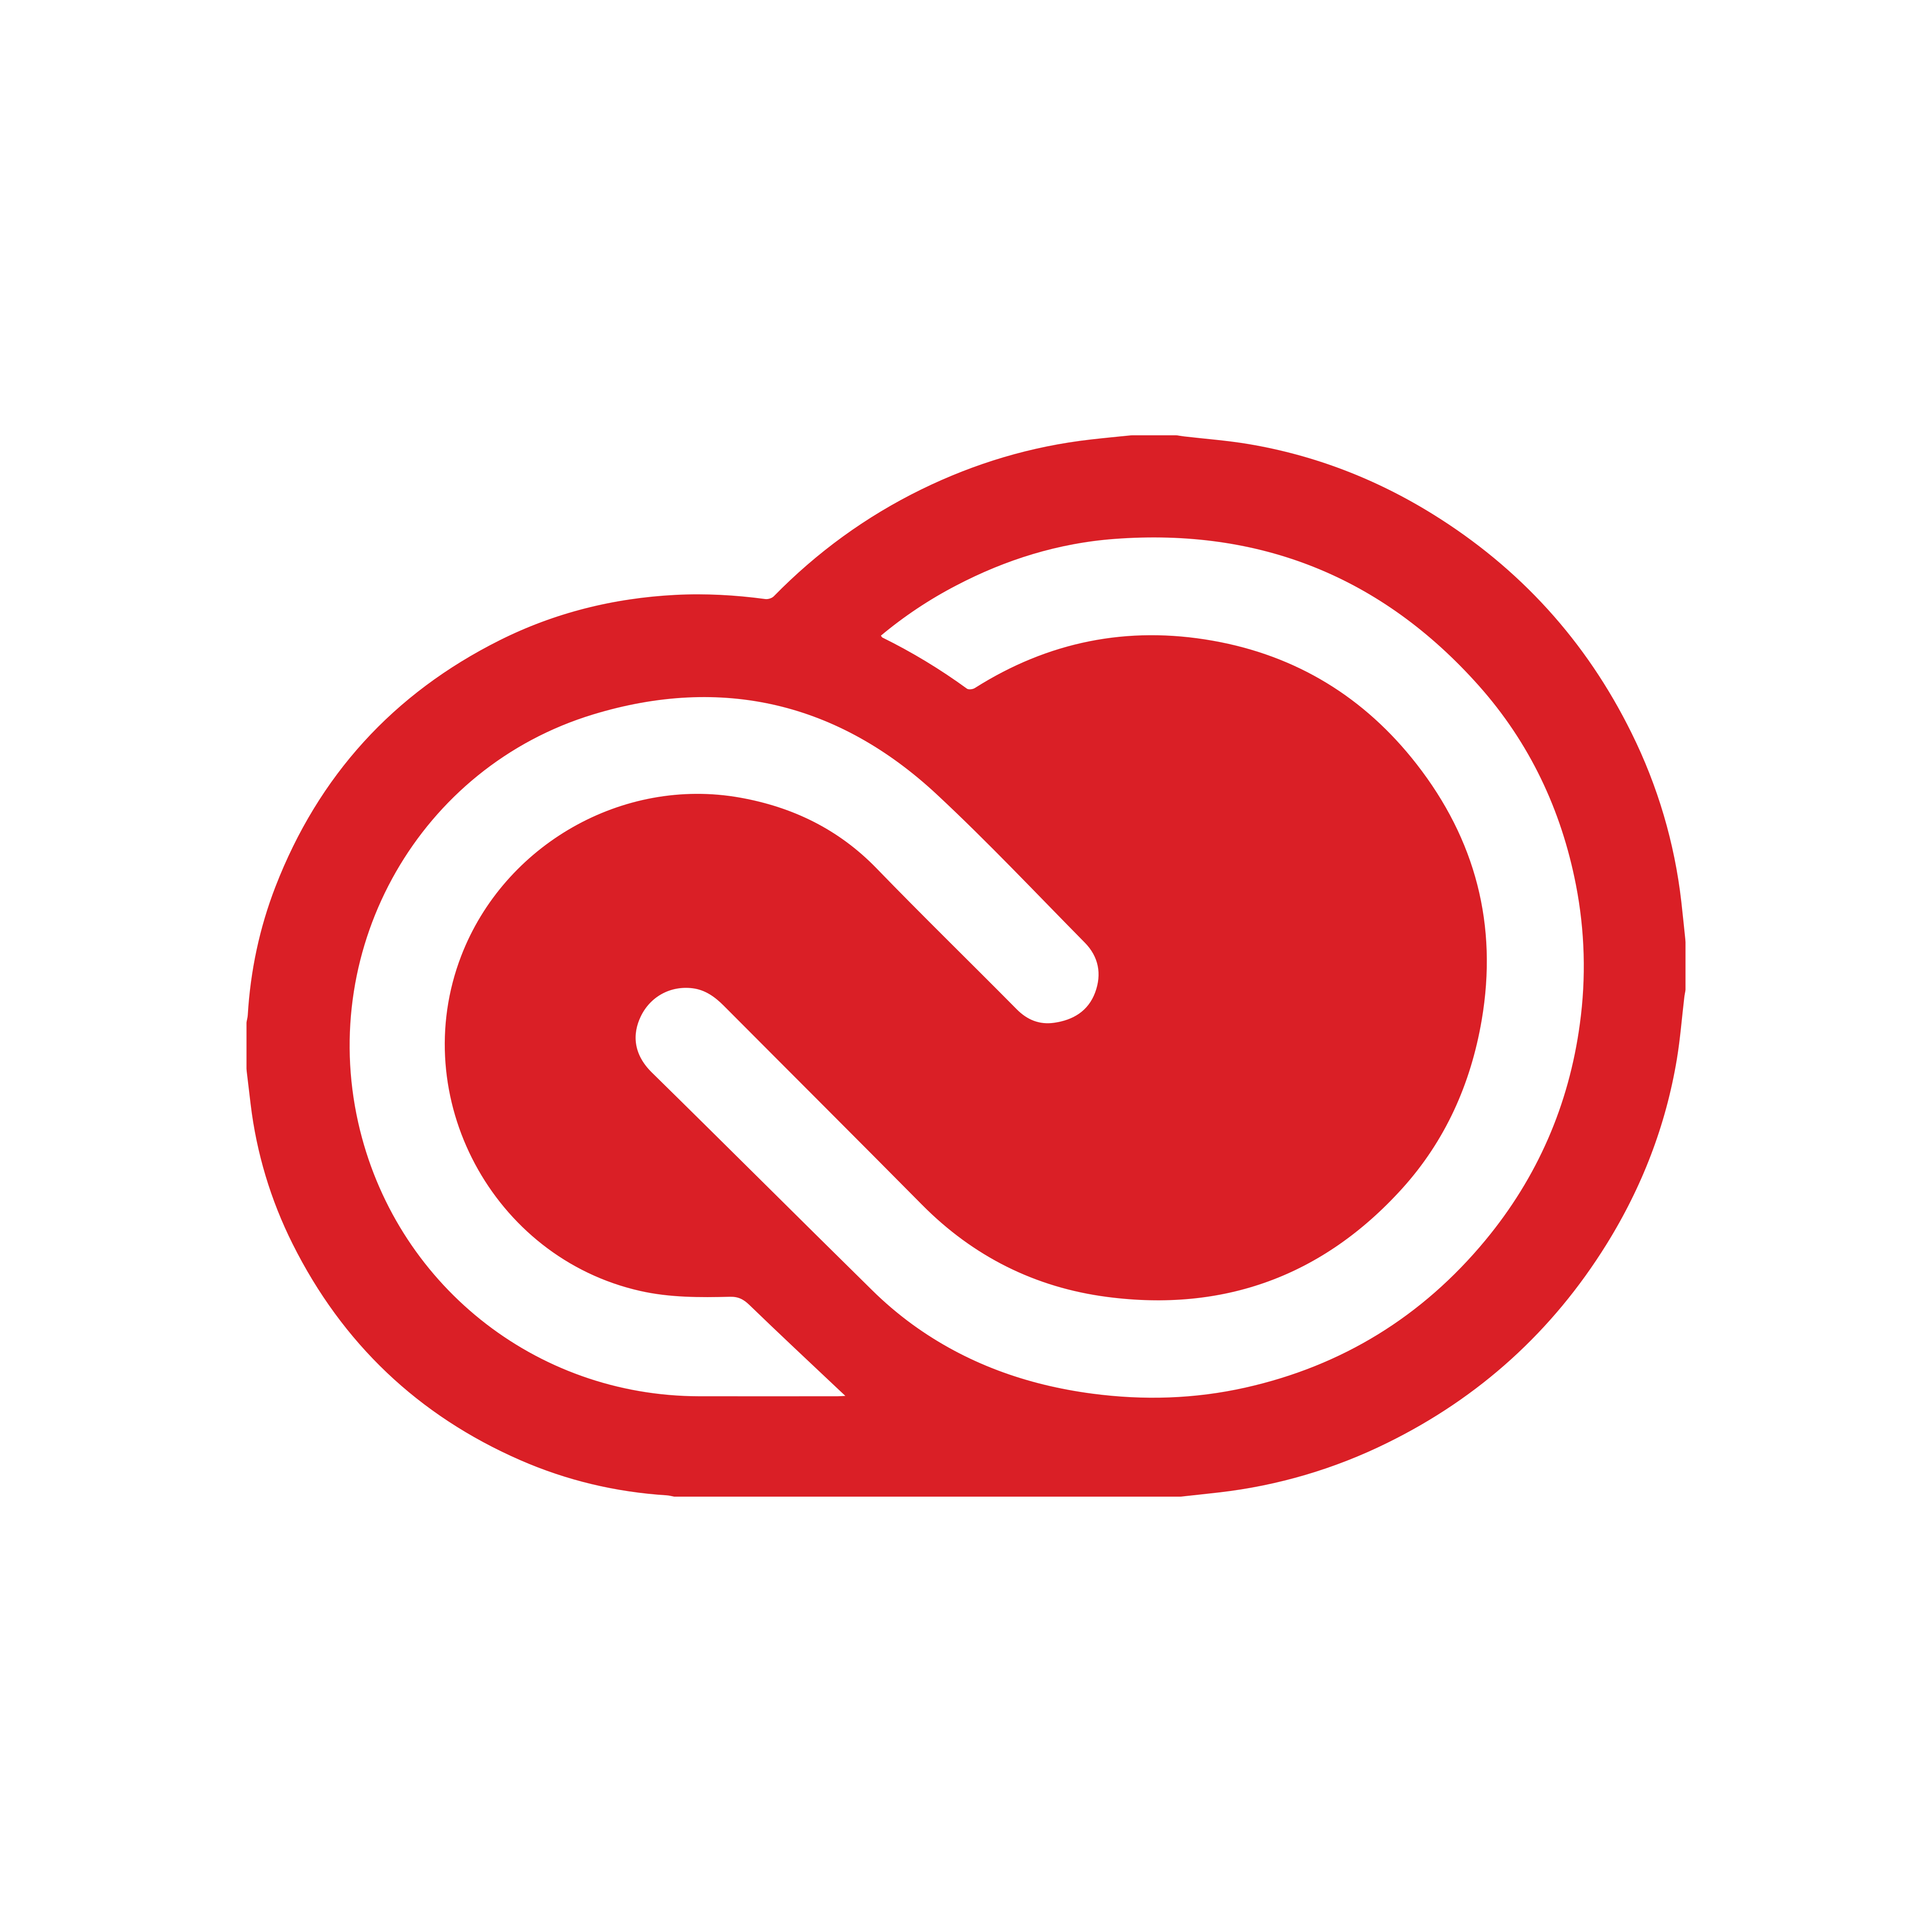 Adobe Creative Cloud Logo PNG.